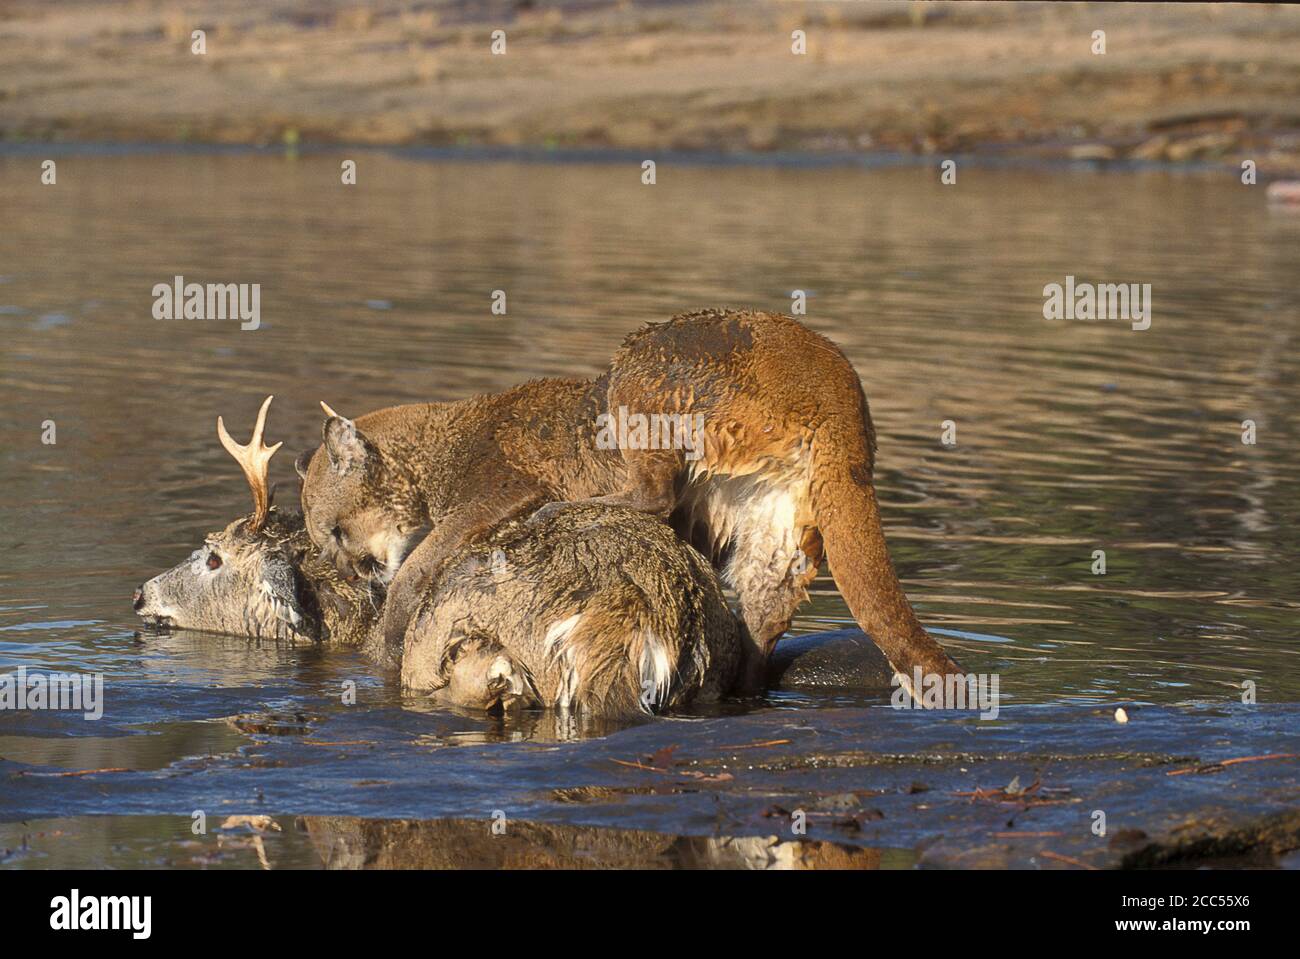 Cougar oder Mountain Lion (Felis concolor), auf Hirsch töten in Fluss, Minnesota, USA, kontrollierte Situation Stockfoto